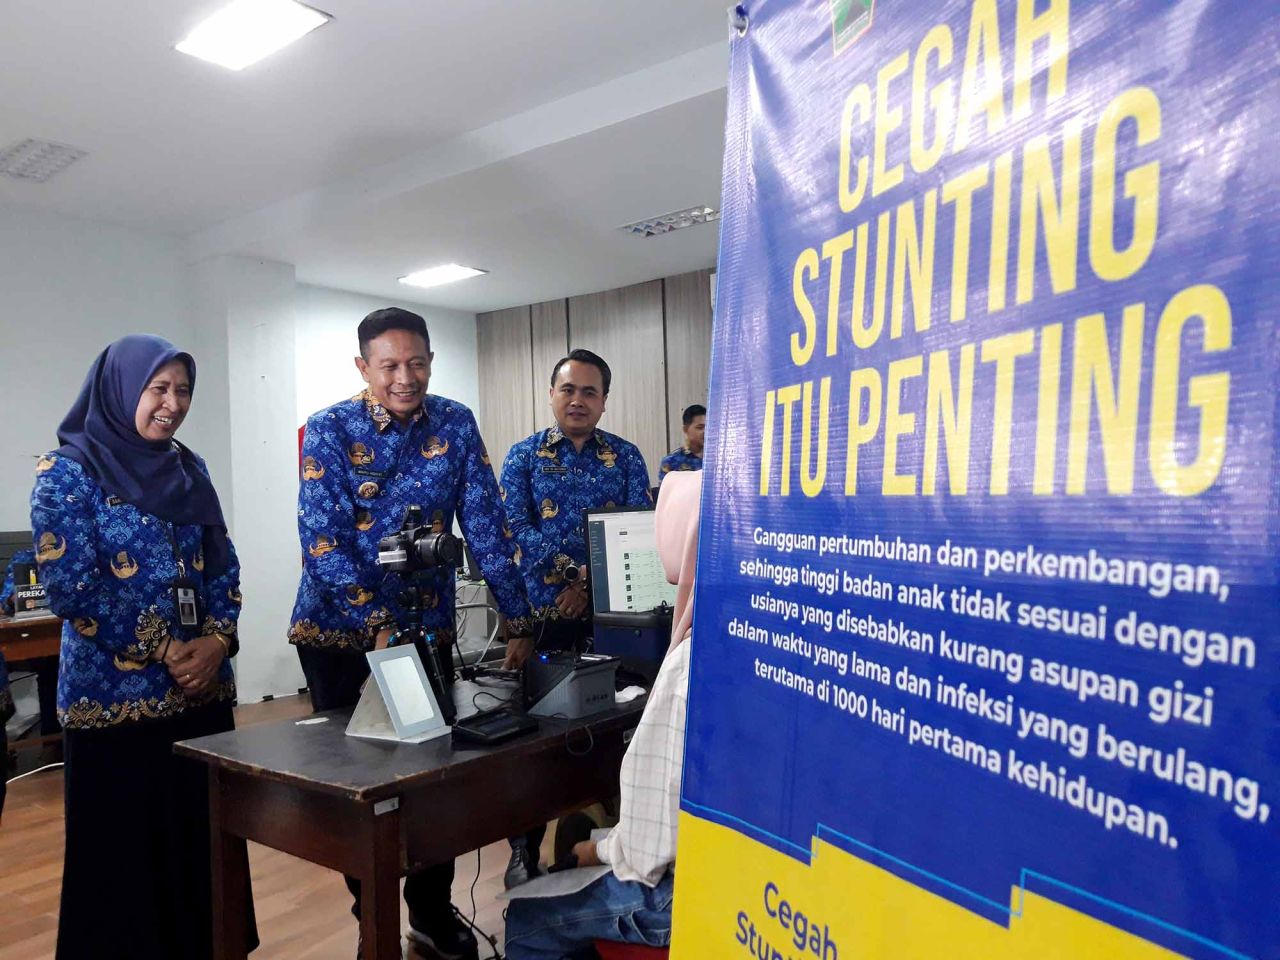 Penjabat Wali Kota Malang Ungkap Penilaian Sempurna Kinerja Triwulan Kedua